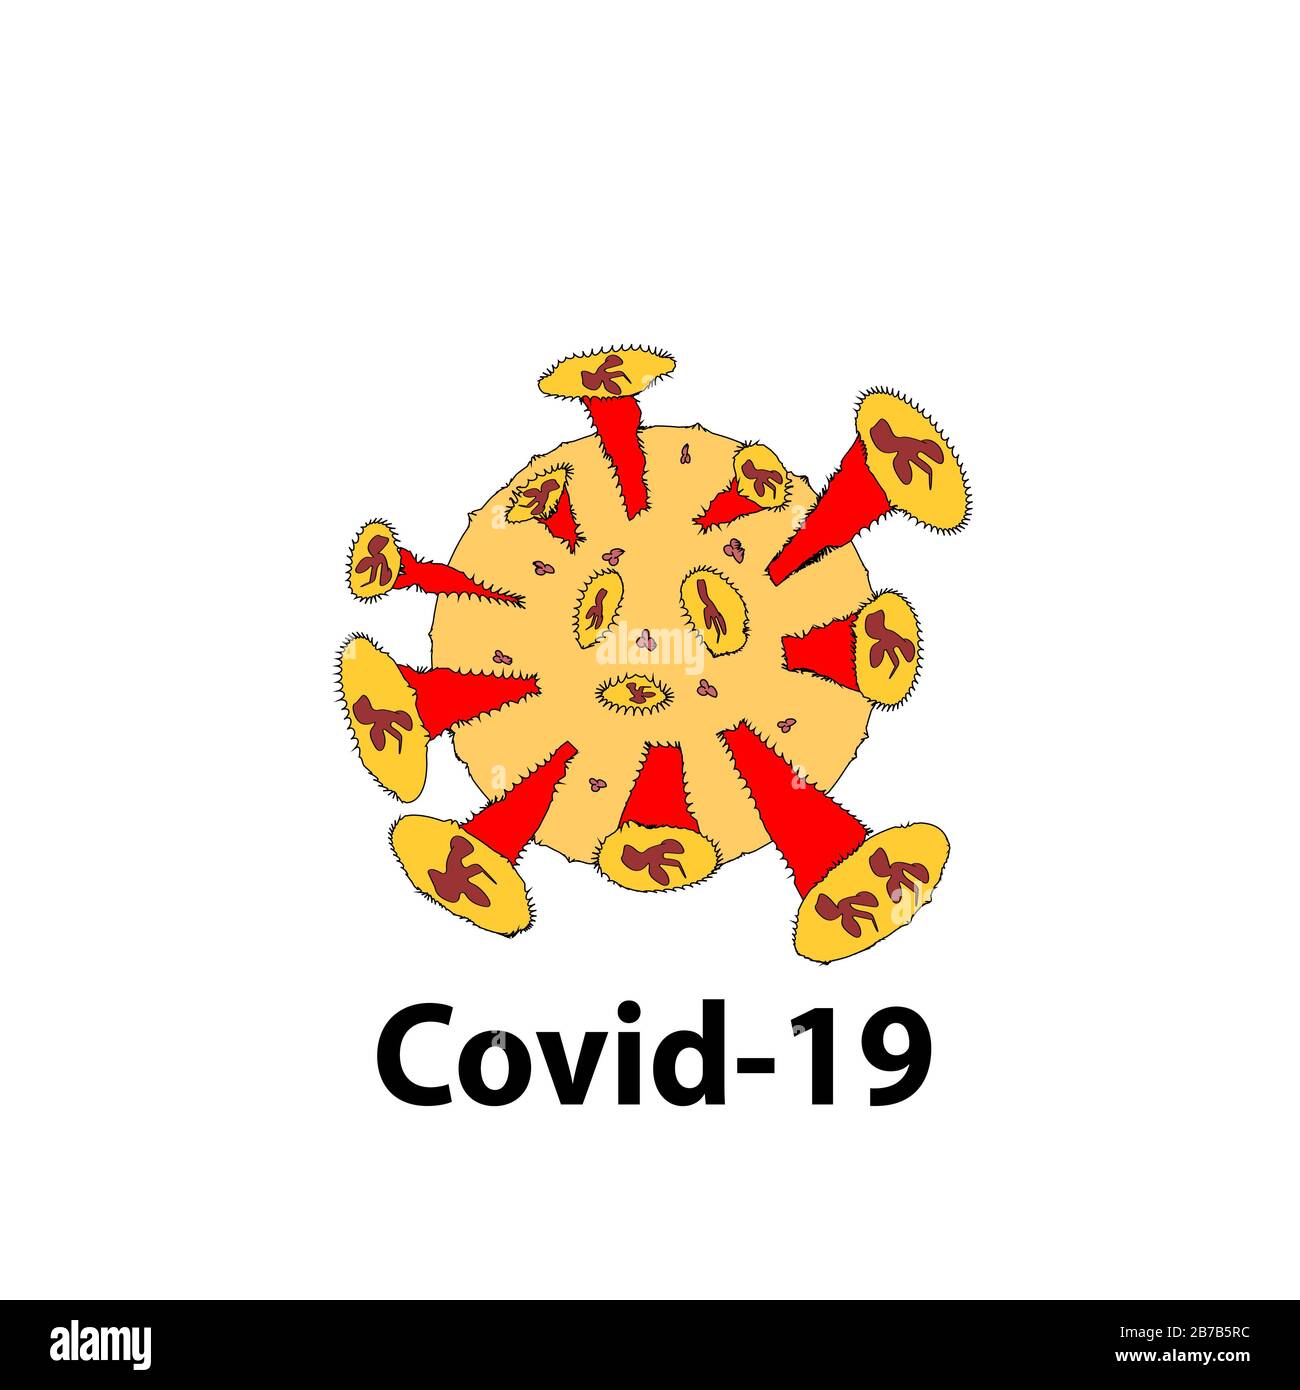 simbolo del virus covid-19. malattia infettiva pandemica epidemica coronavirus. Foto Stock